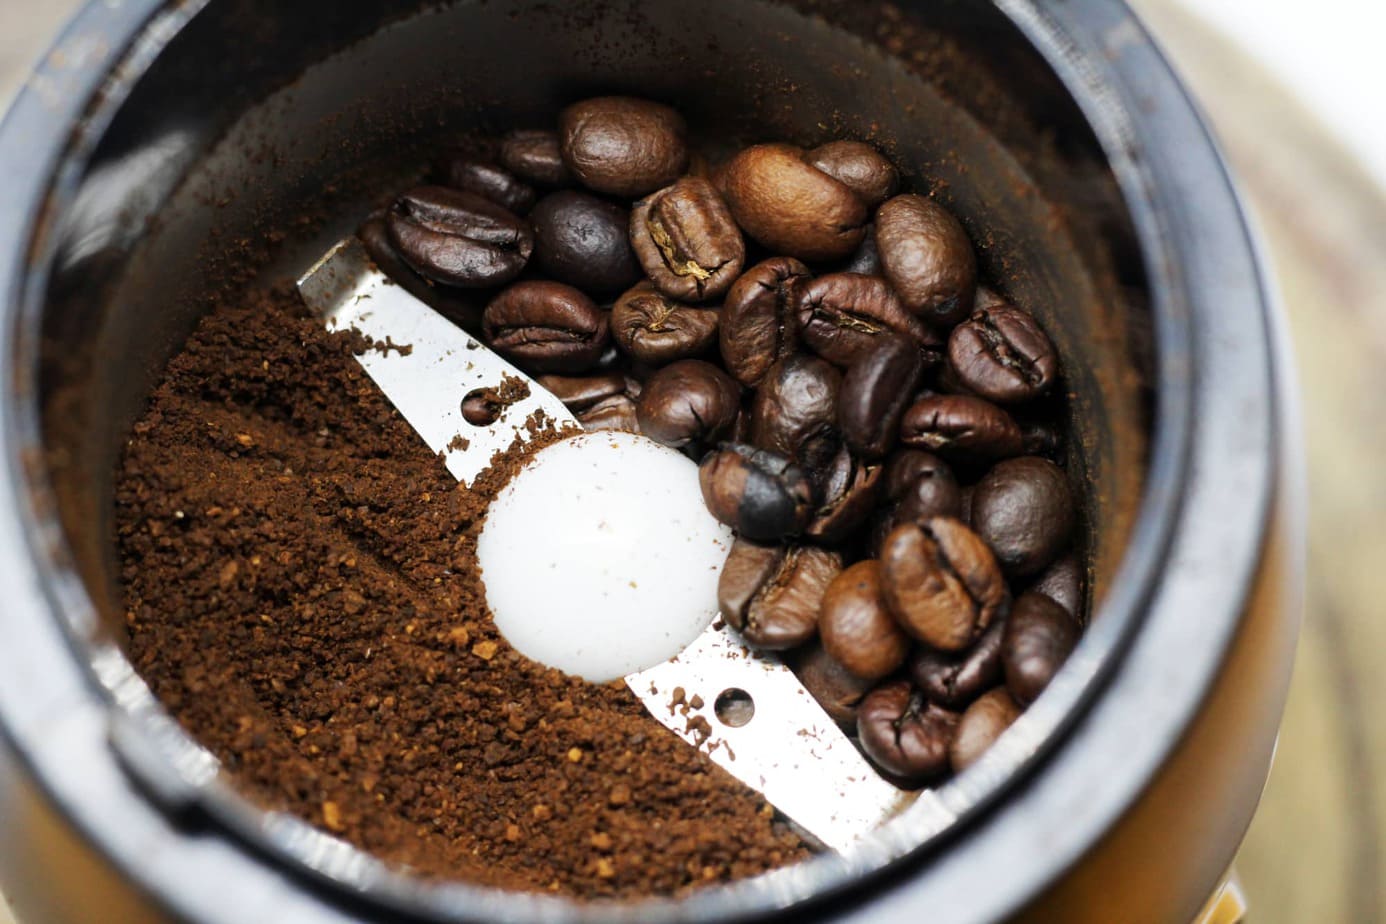 How To Sharpen Coffee Grinder Blades: Dull Blades Won't Cut It